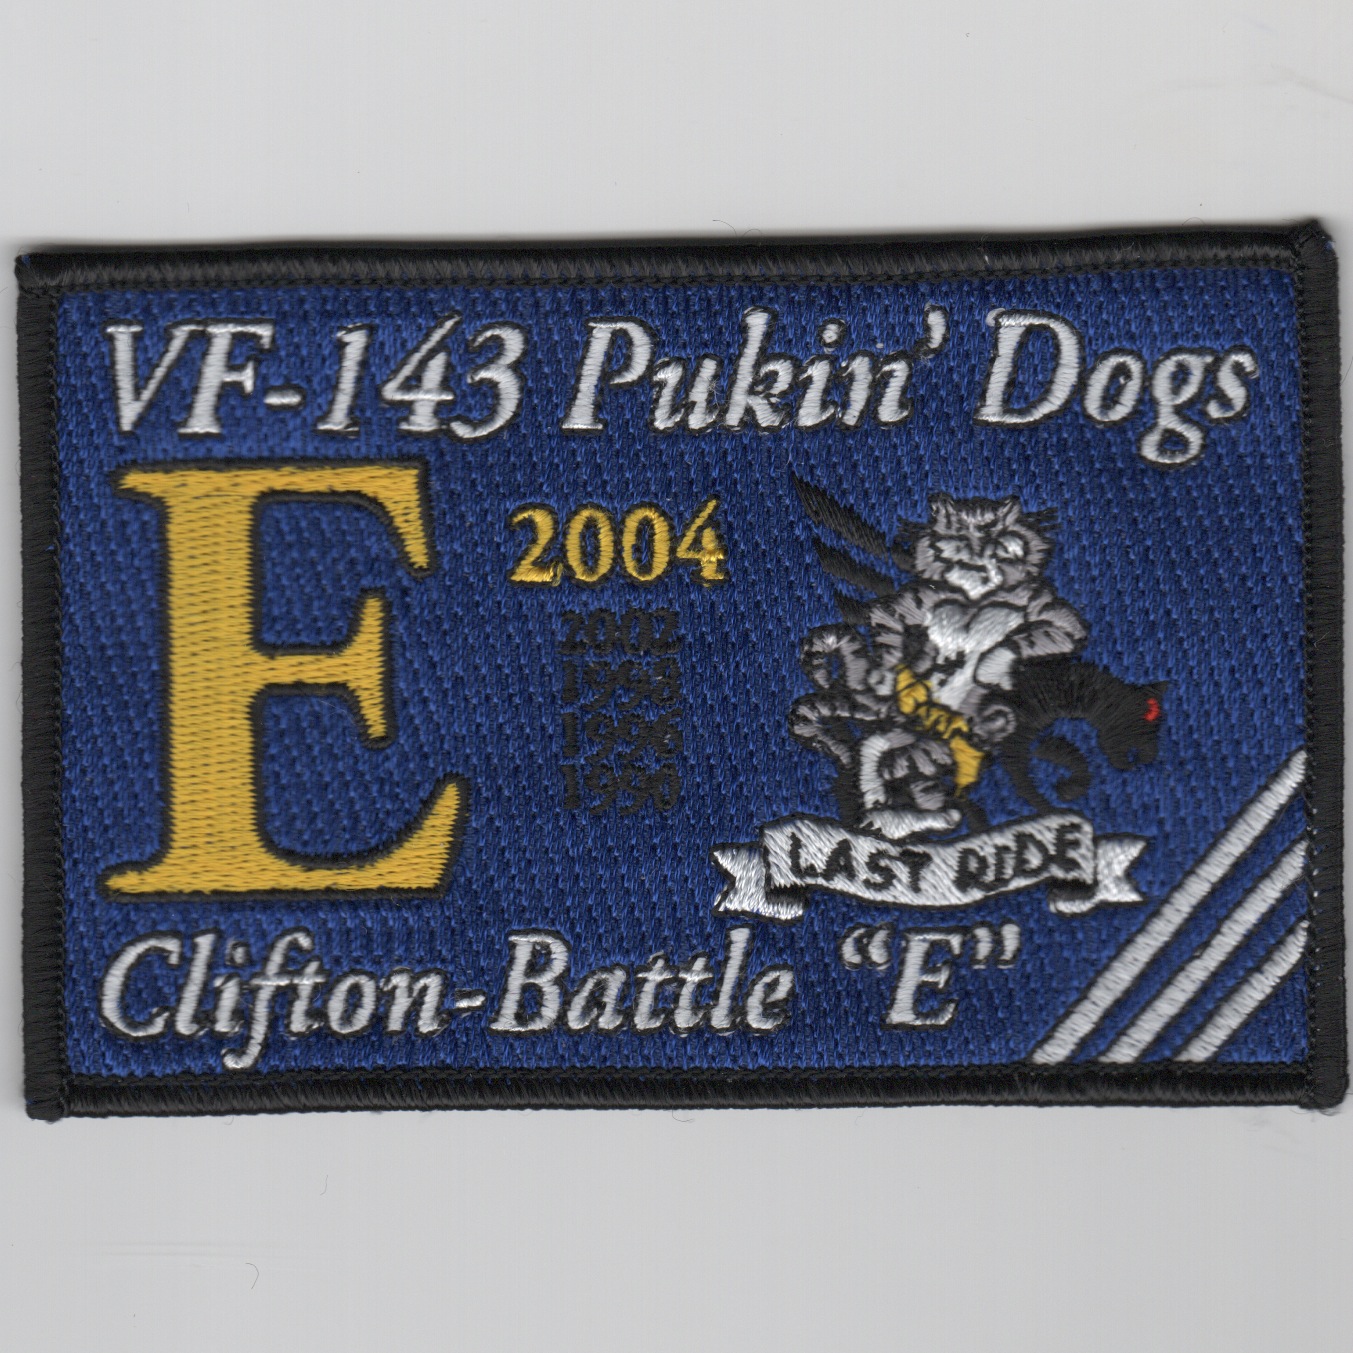 VF-143 2004 Battle 'E' Patch (Rect/Black Border)